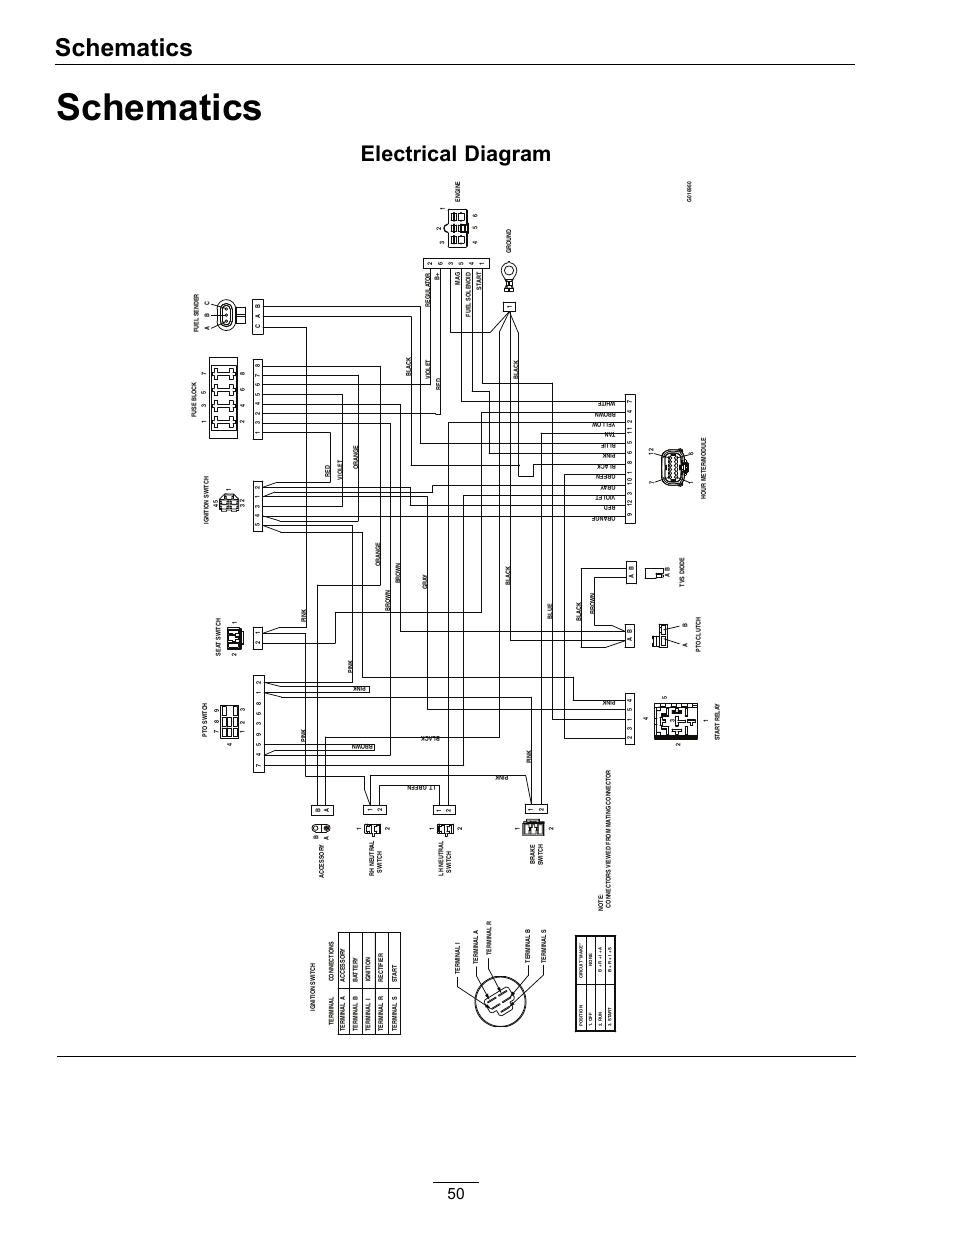 laserline car alarm wiring diagram